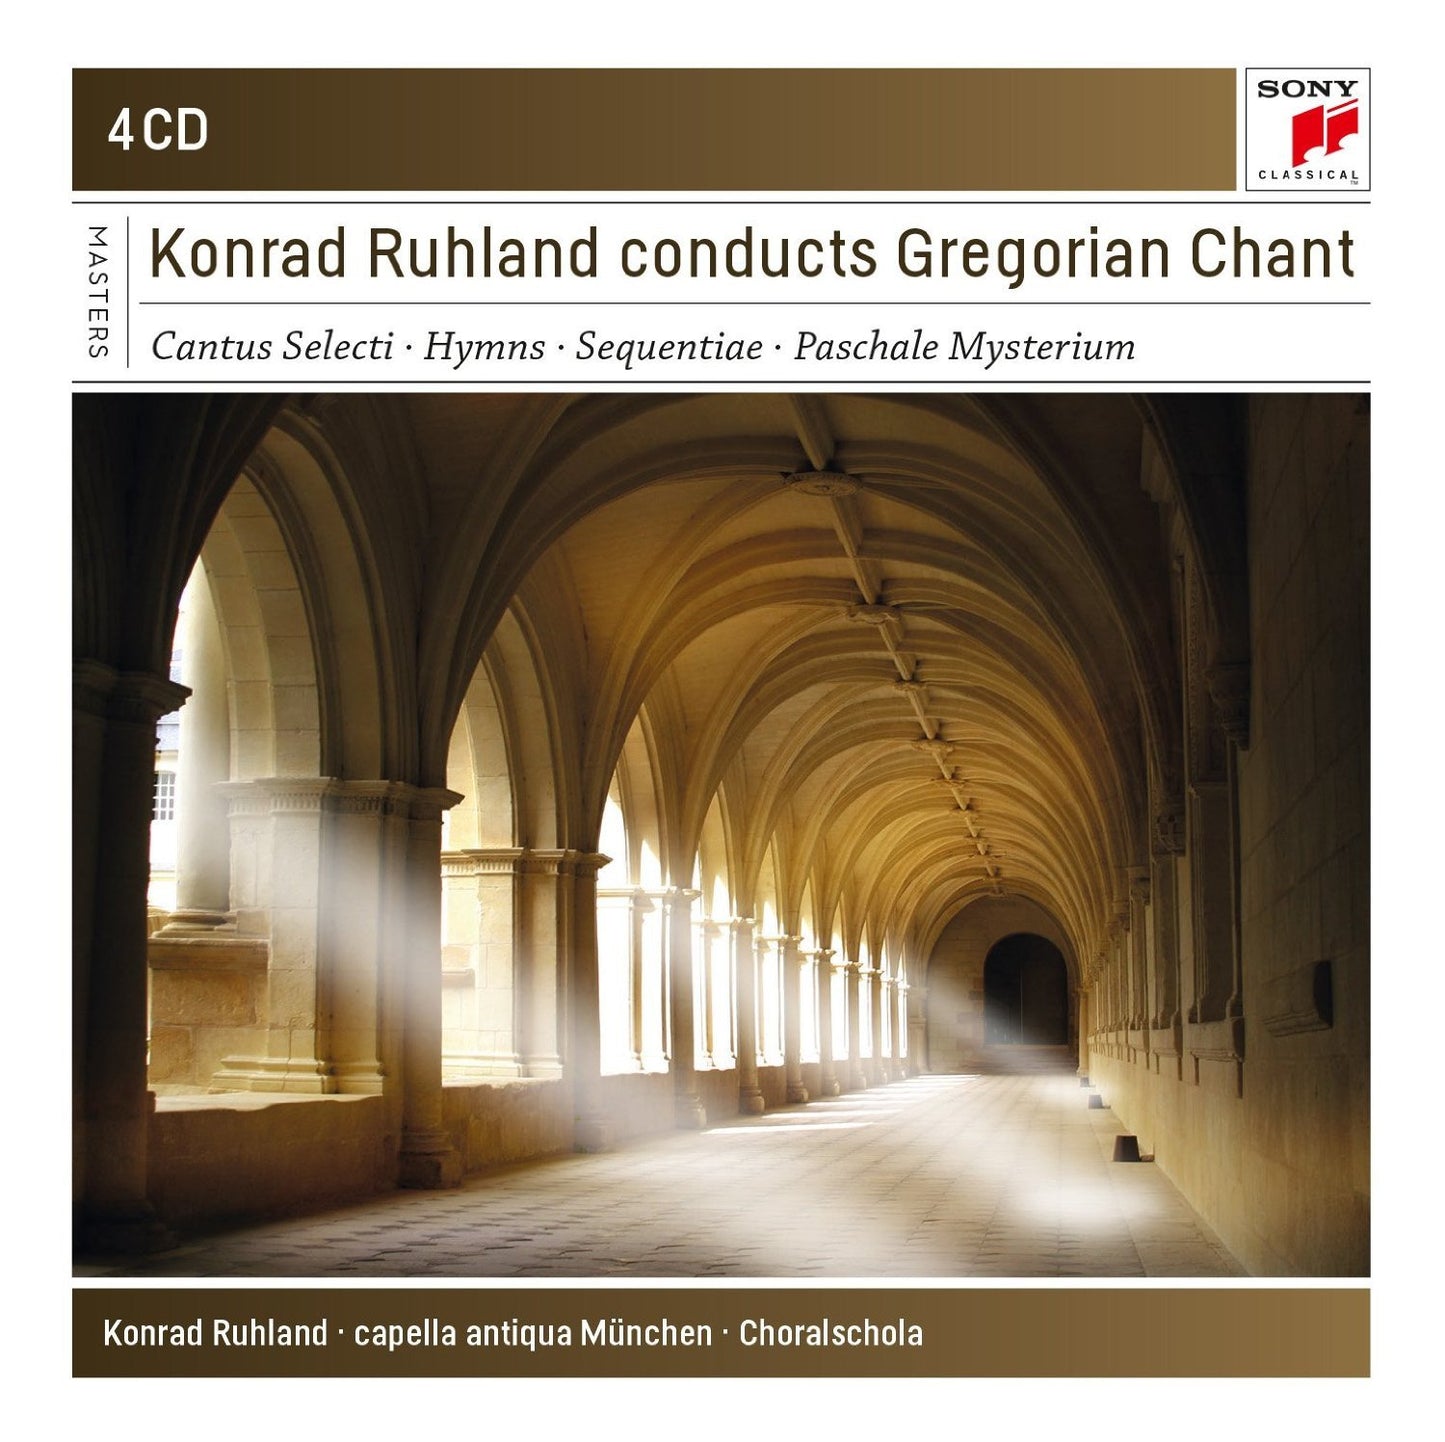 KONRAD RUHLAND CONDUCTS GREGORIAN CHANT (4 CDS)